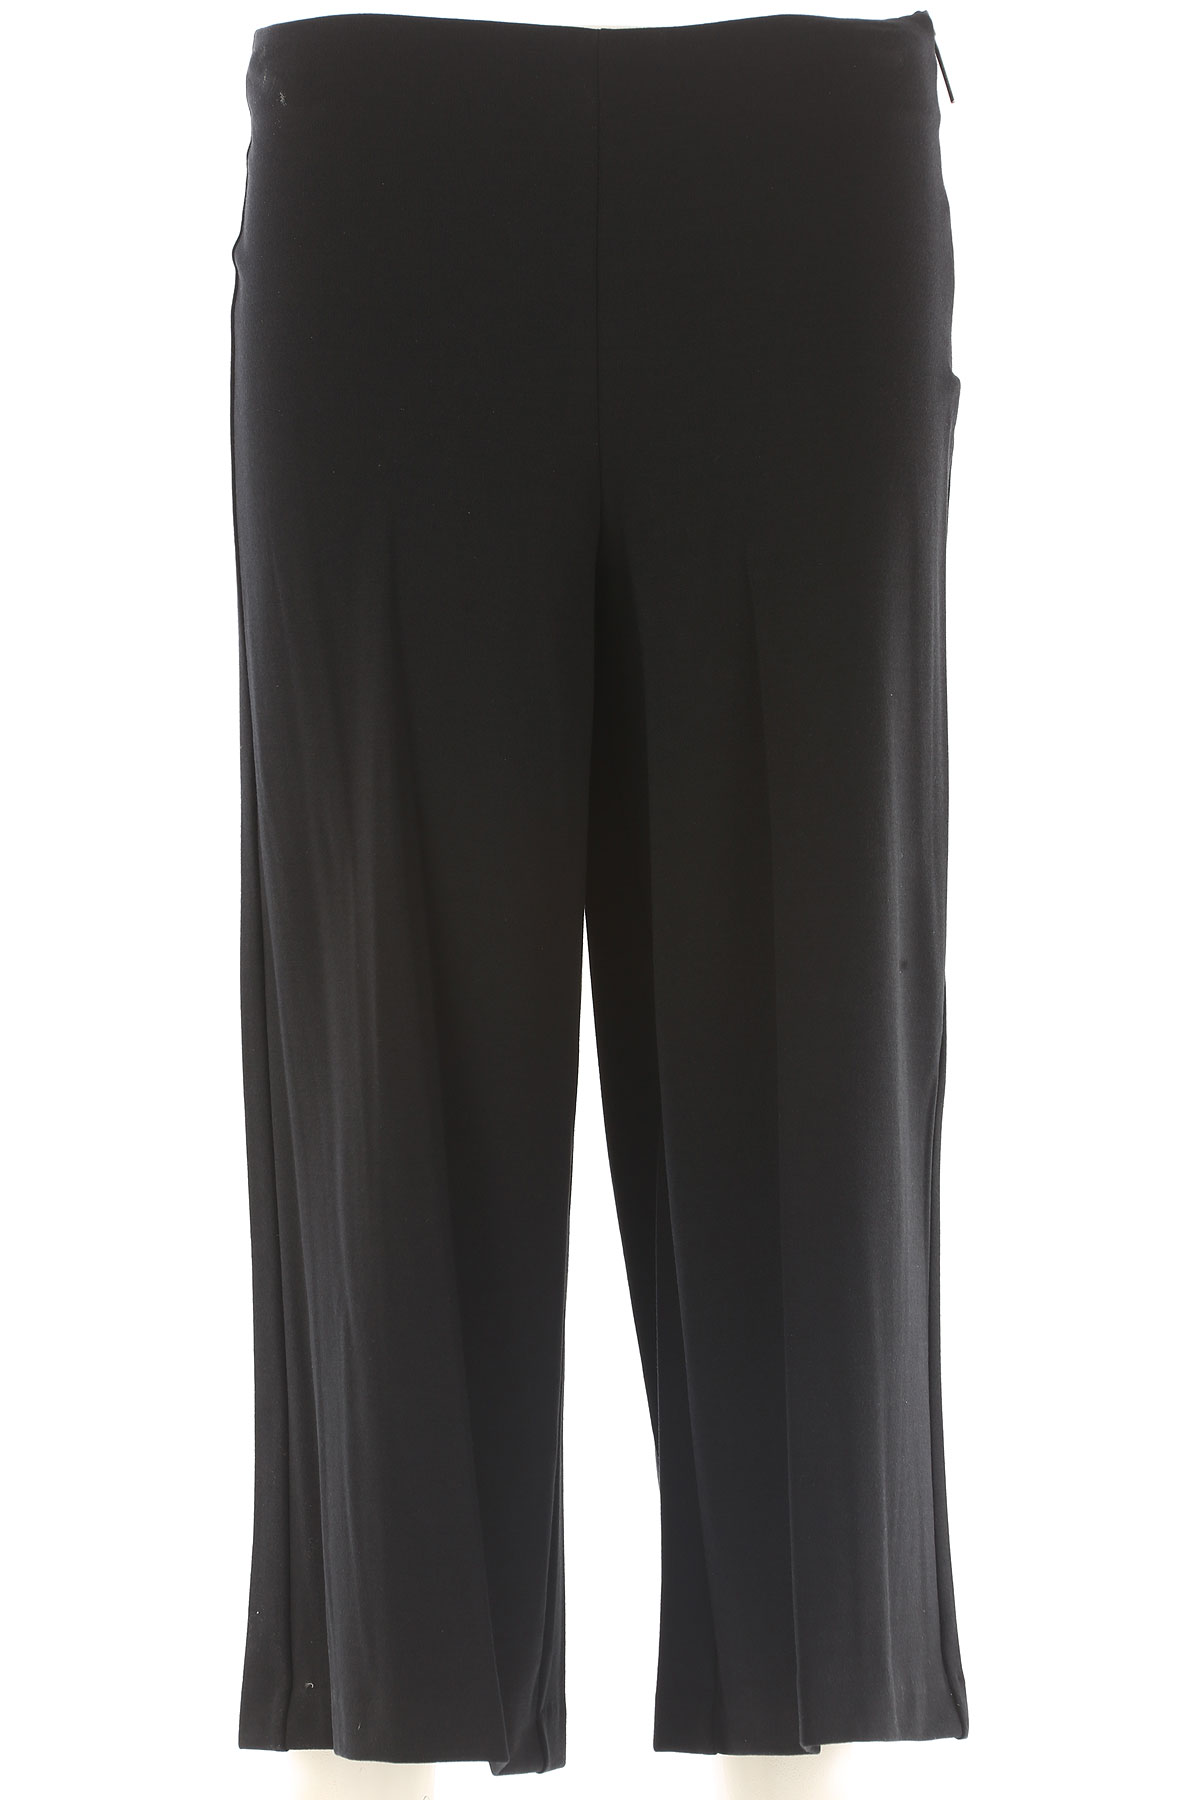 Michael Kors Pantalon Femme , Noir, Polyester, 2017, 42 44